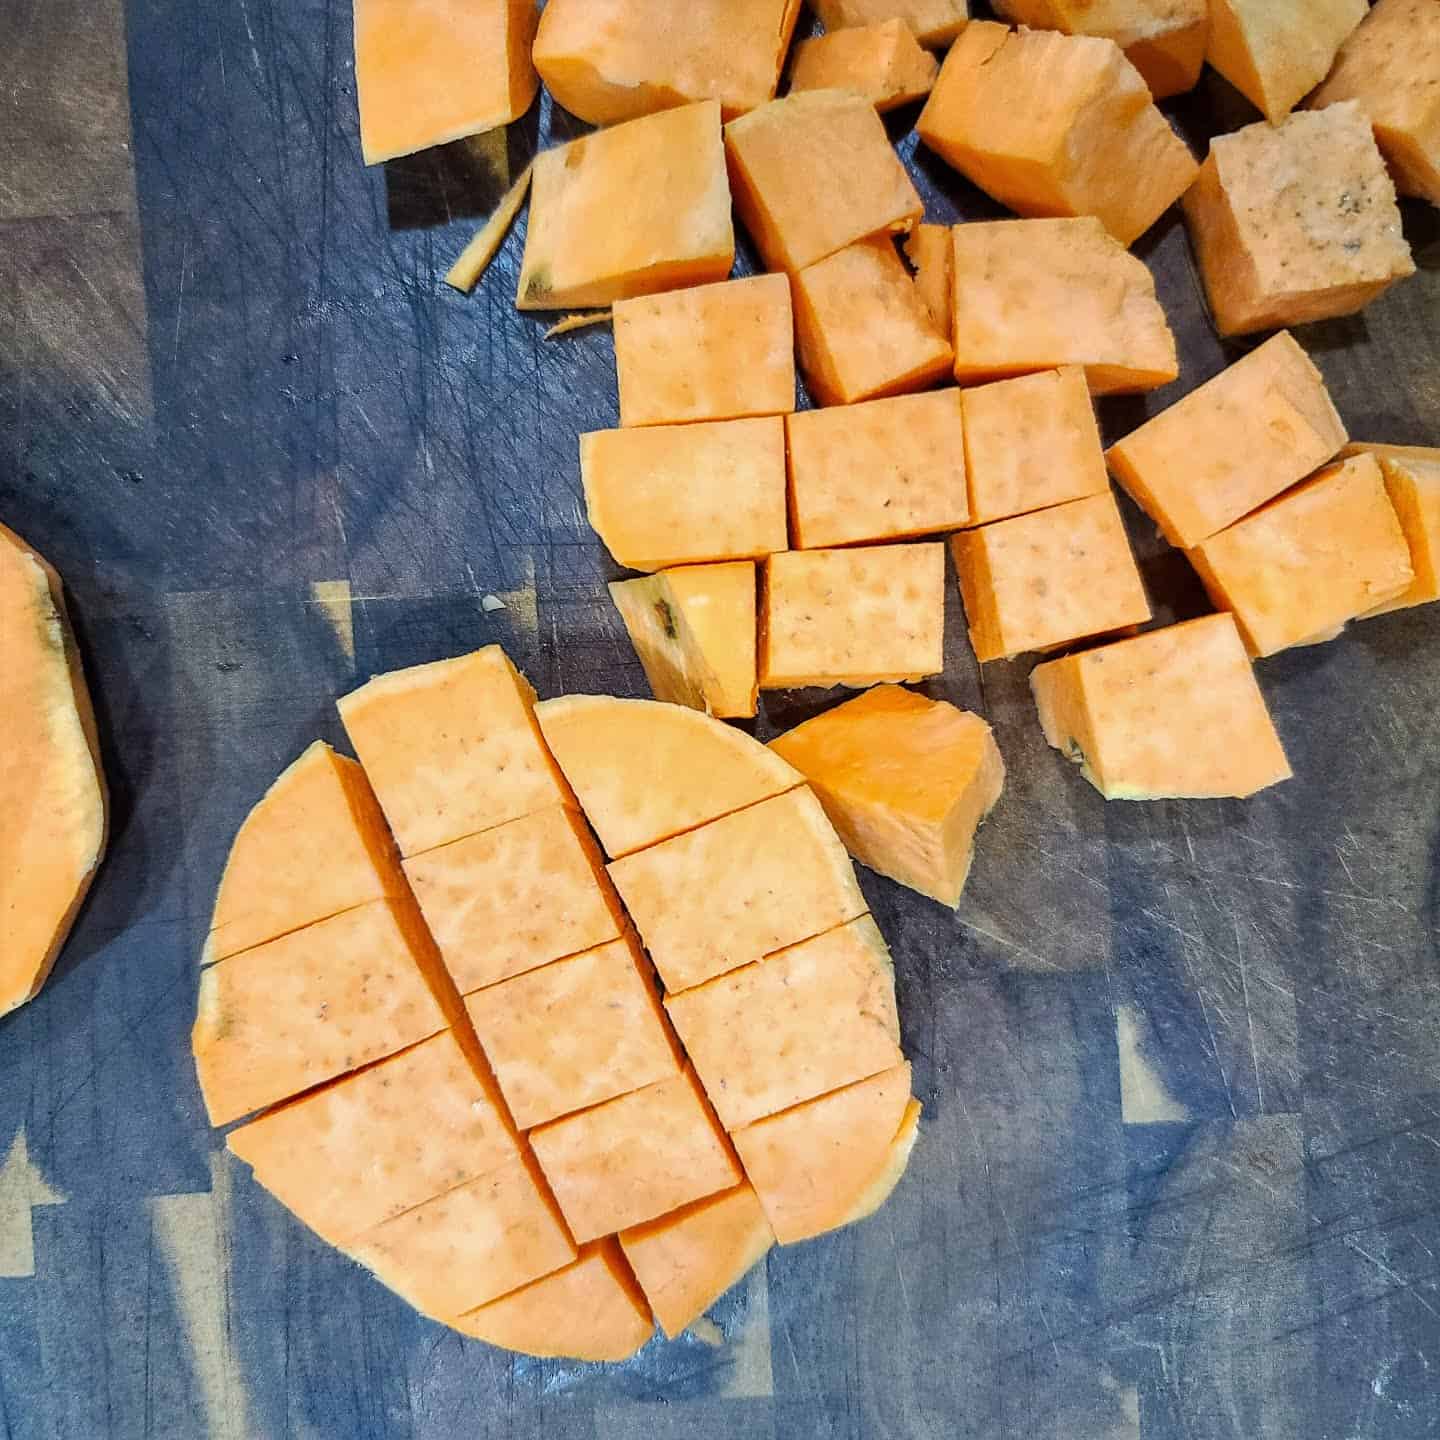 Air fryer sweet potatoes 19